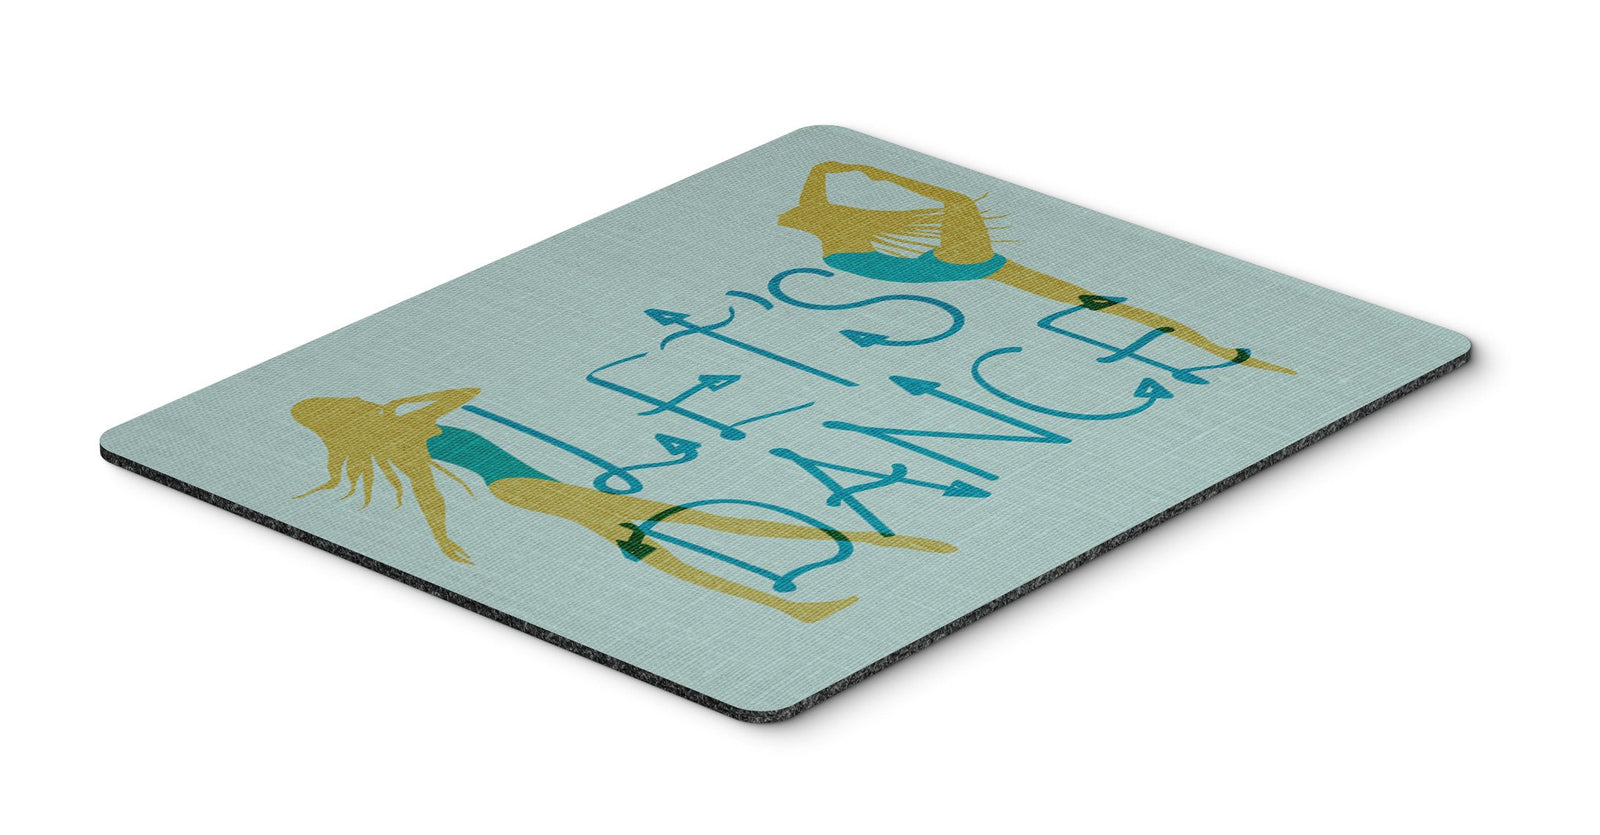 Let's Dance Linen Teal Mouse Pad, Hot Pad or Trivet BB5374MP by Caroline's Treasures